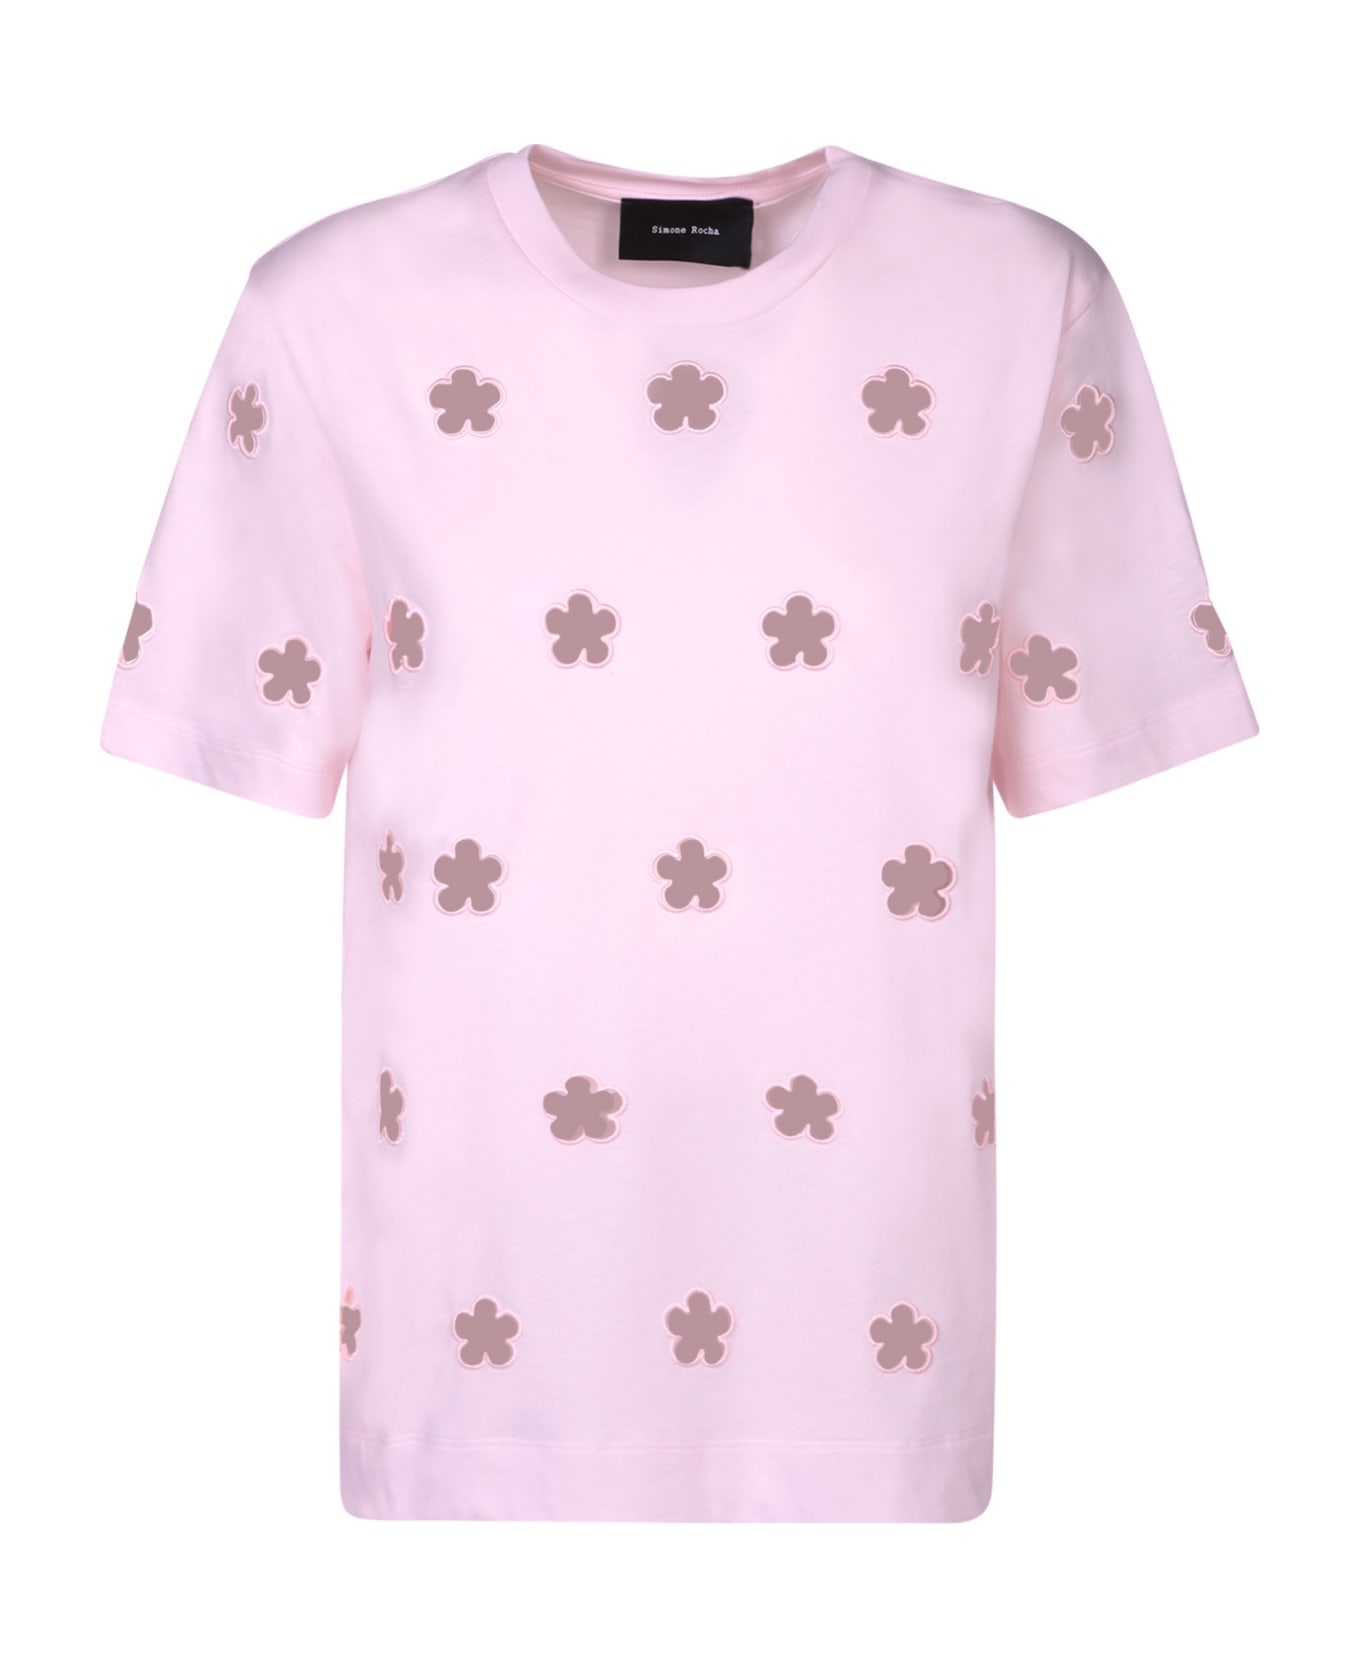 Simone Rocha Floral Cut-out T-shirt - Pink